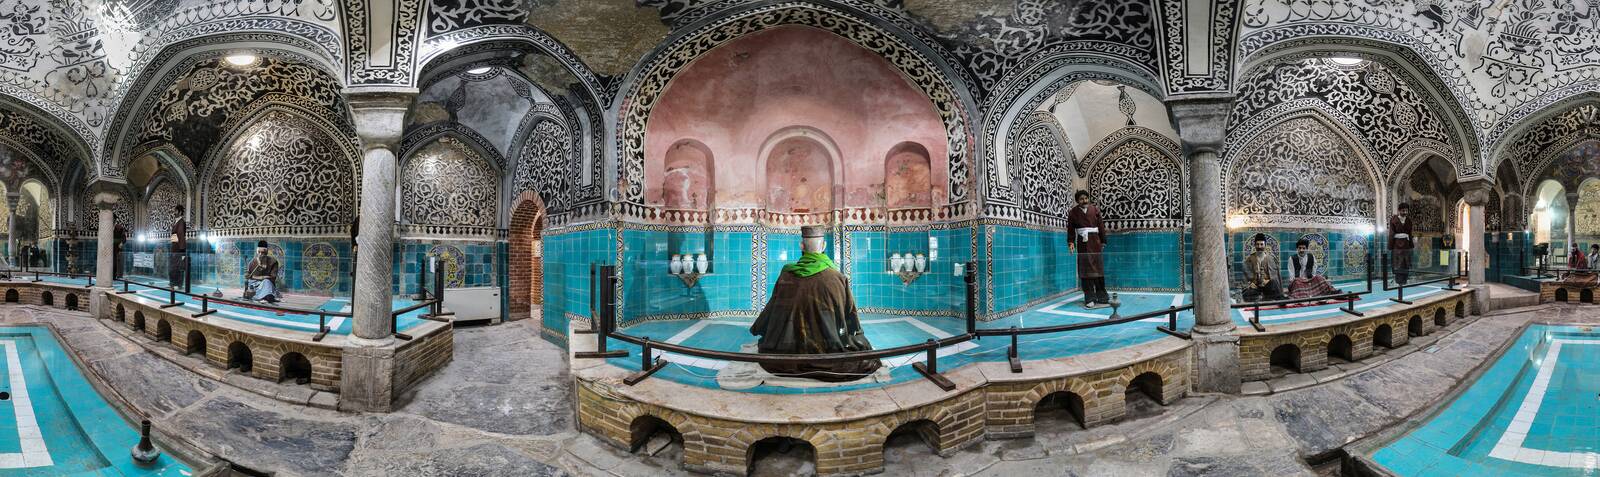 Haj Agha Torab Bathroom (Hammam)